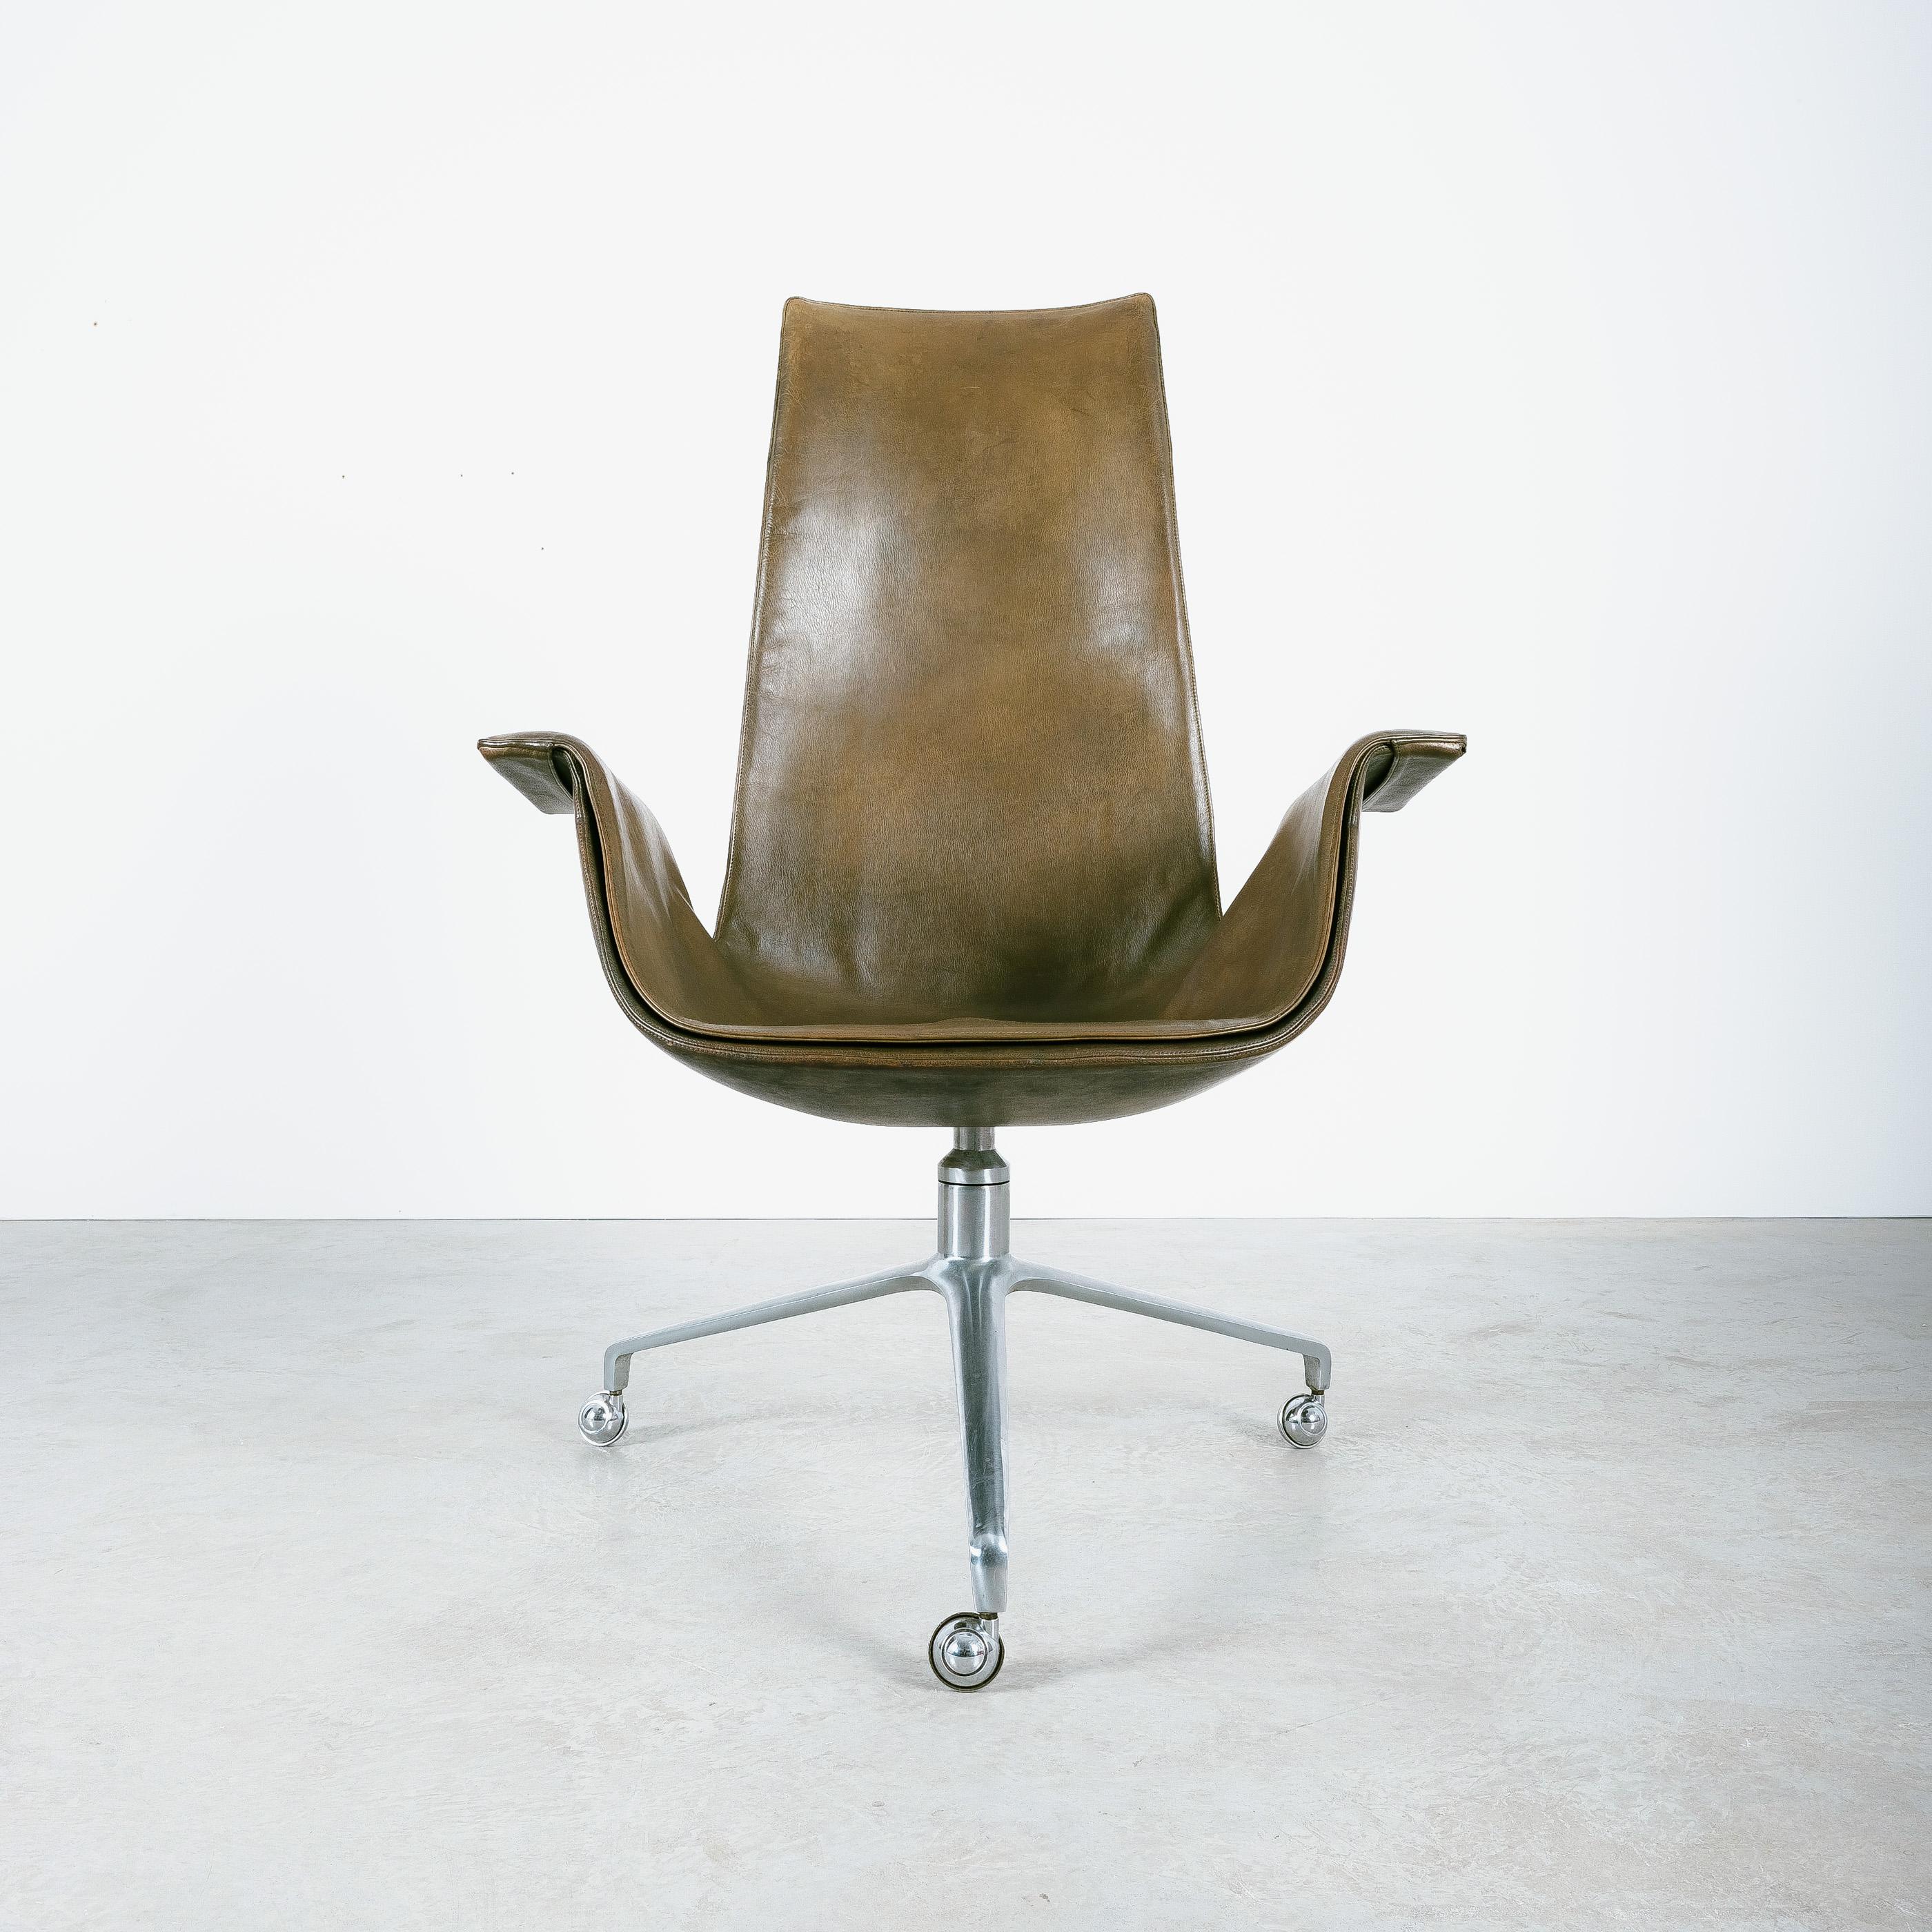 Original mid century dark green or khaki leather desk chair (seat height 17.23